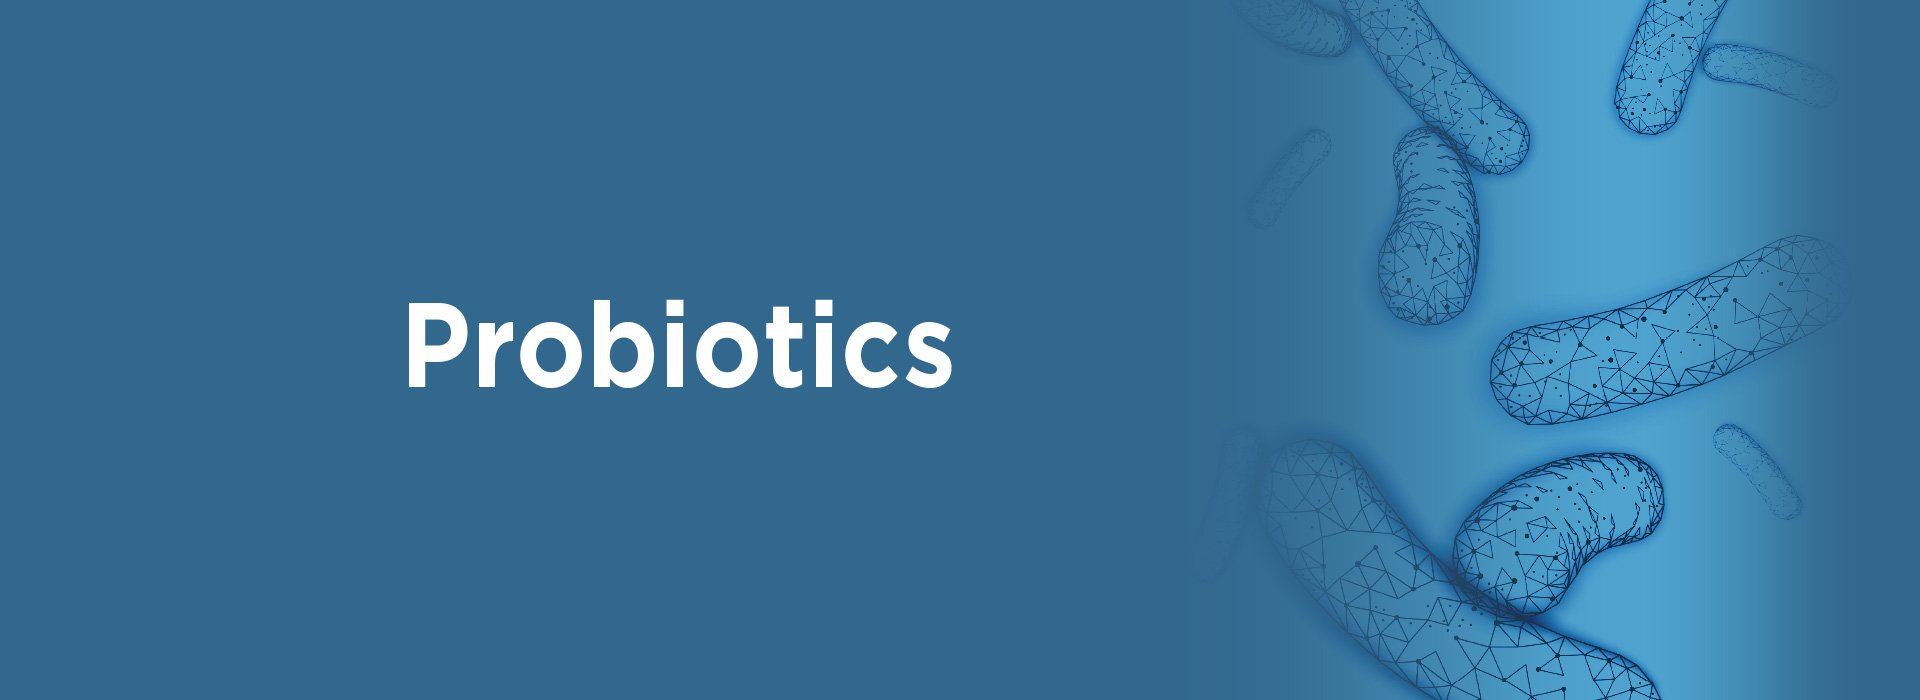 New Image International:Probiotics